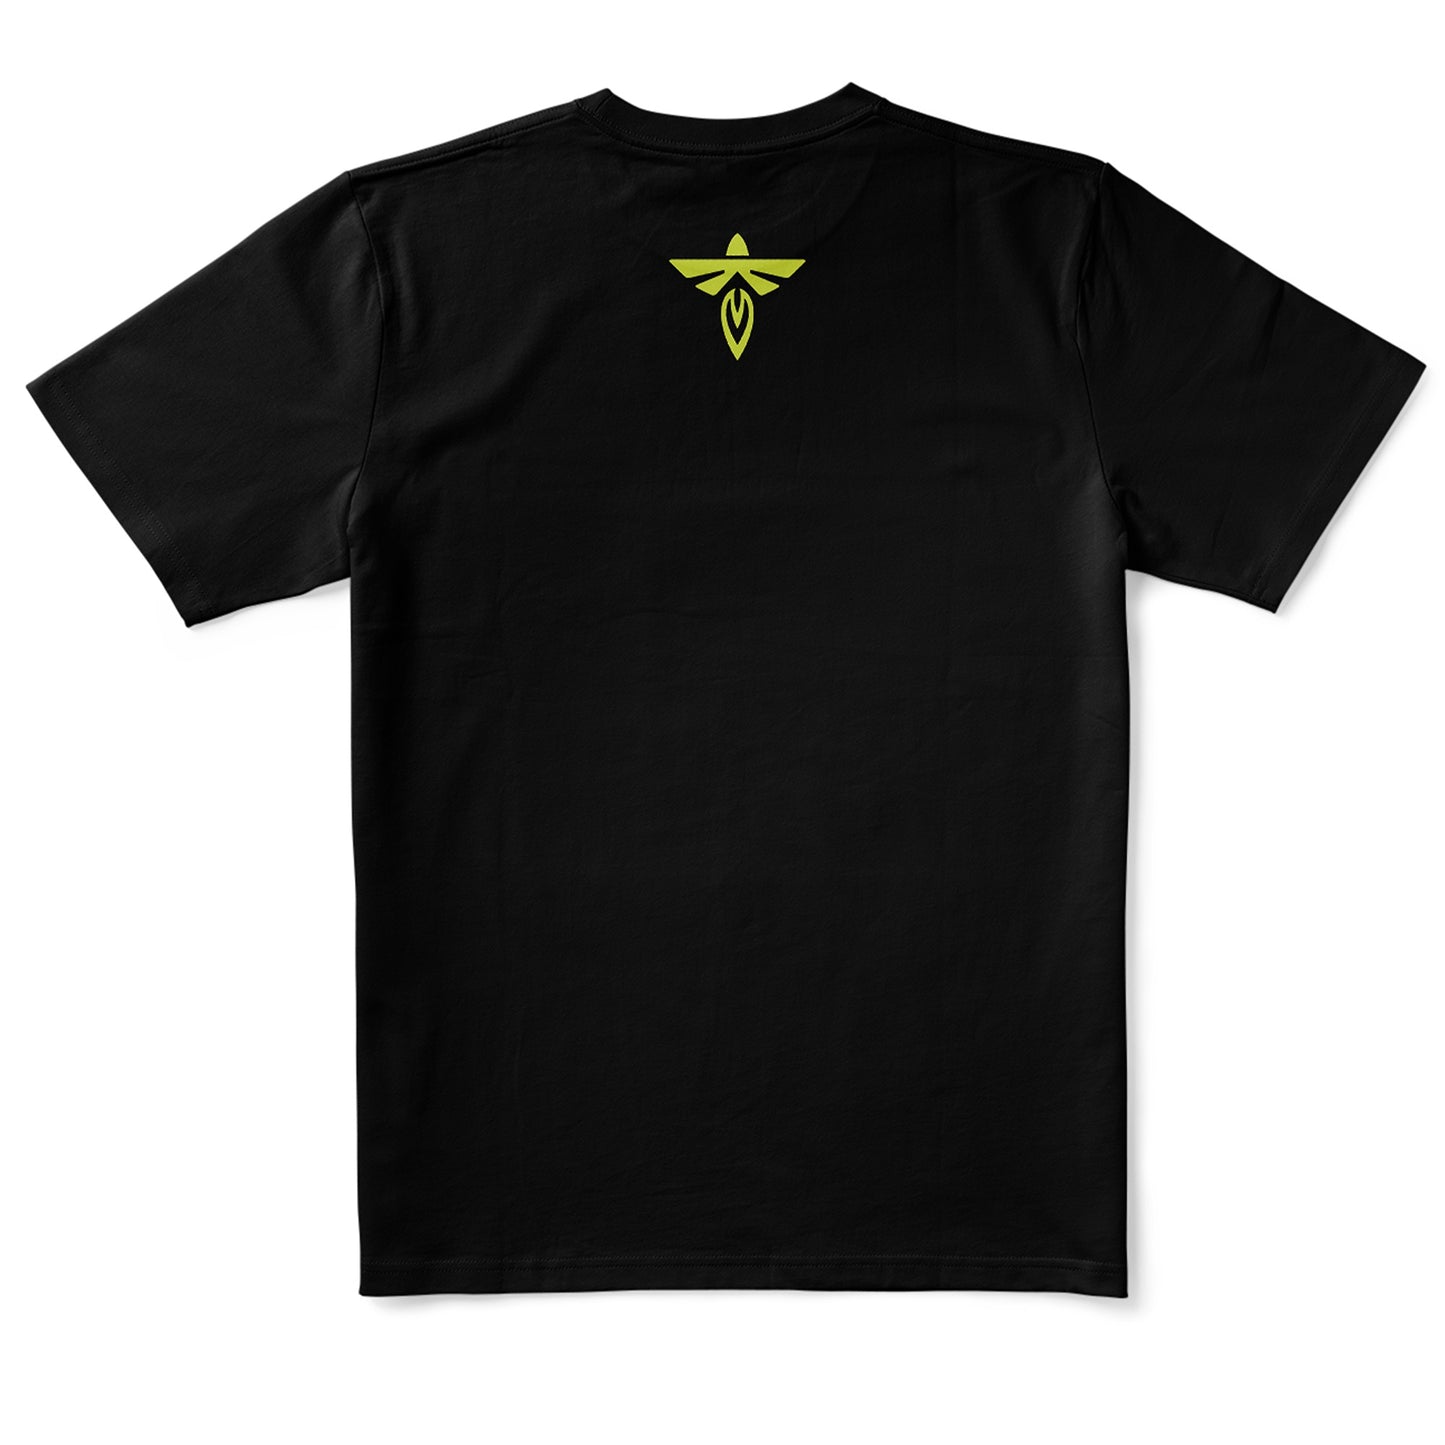 Firefly Aerospace T-Shirt